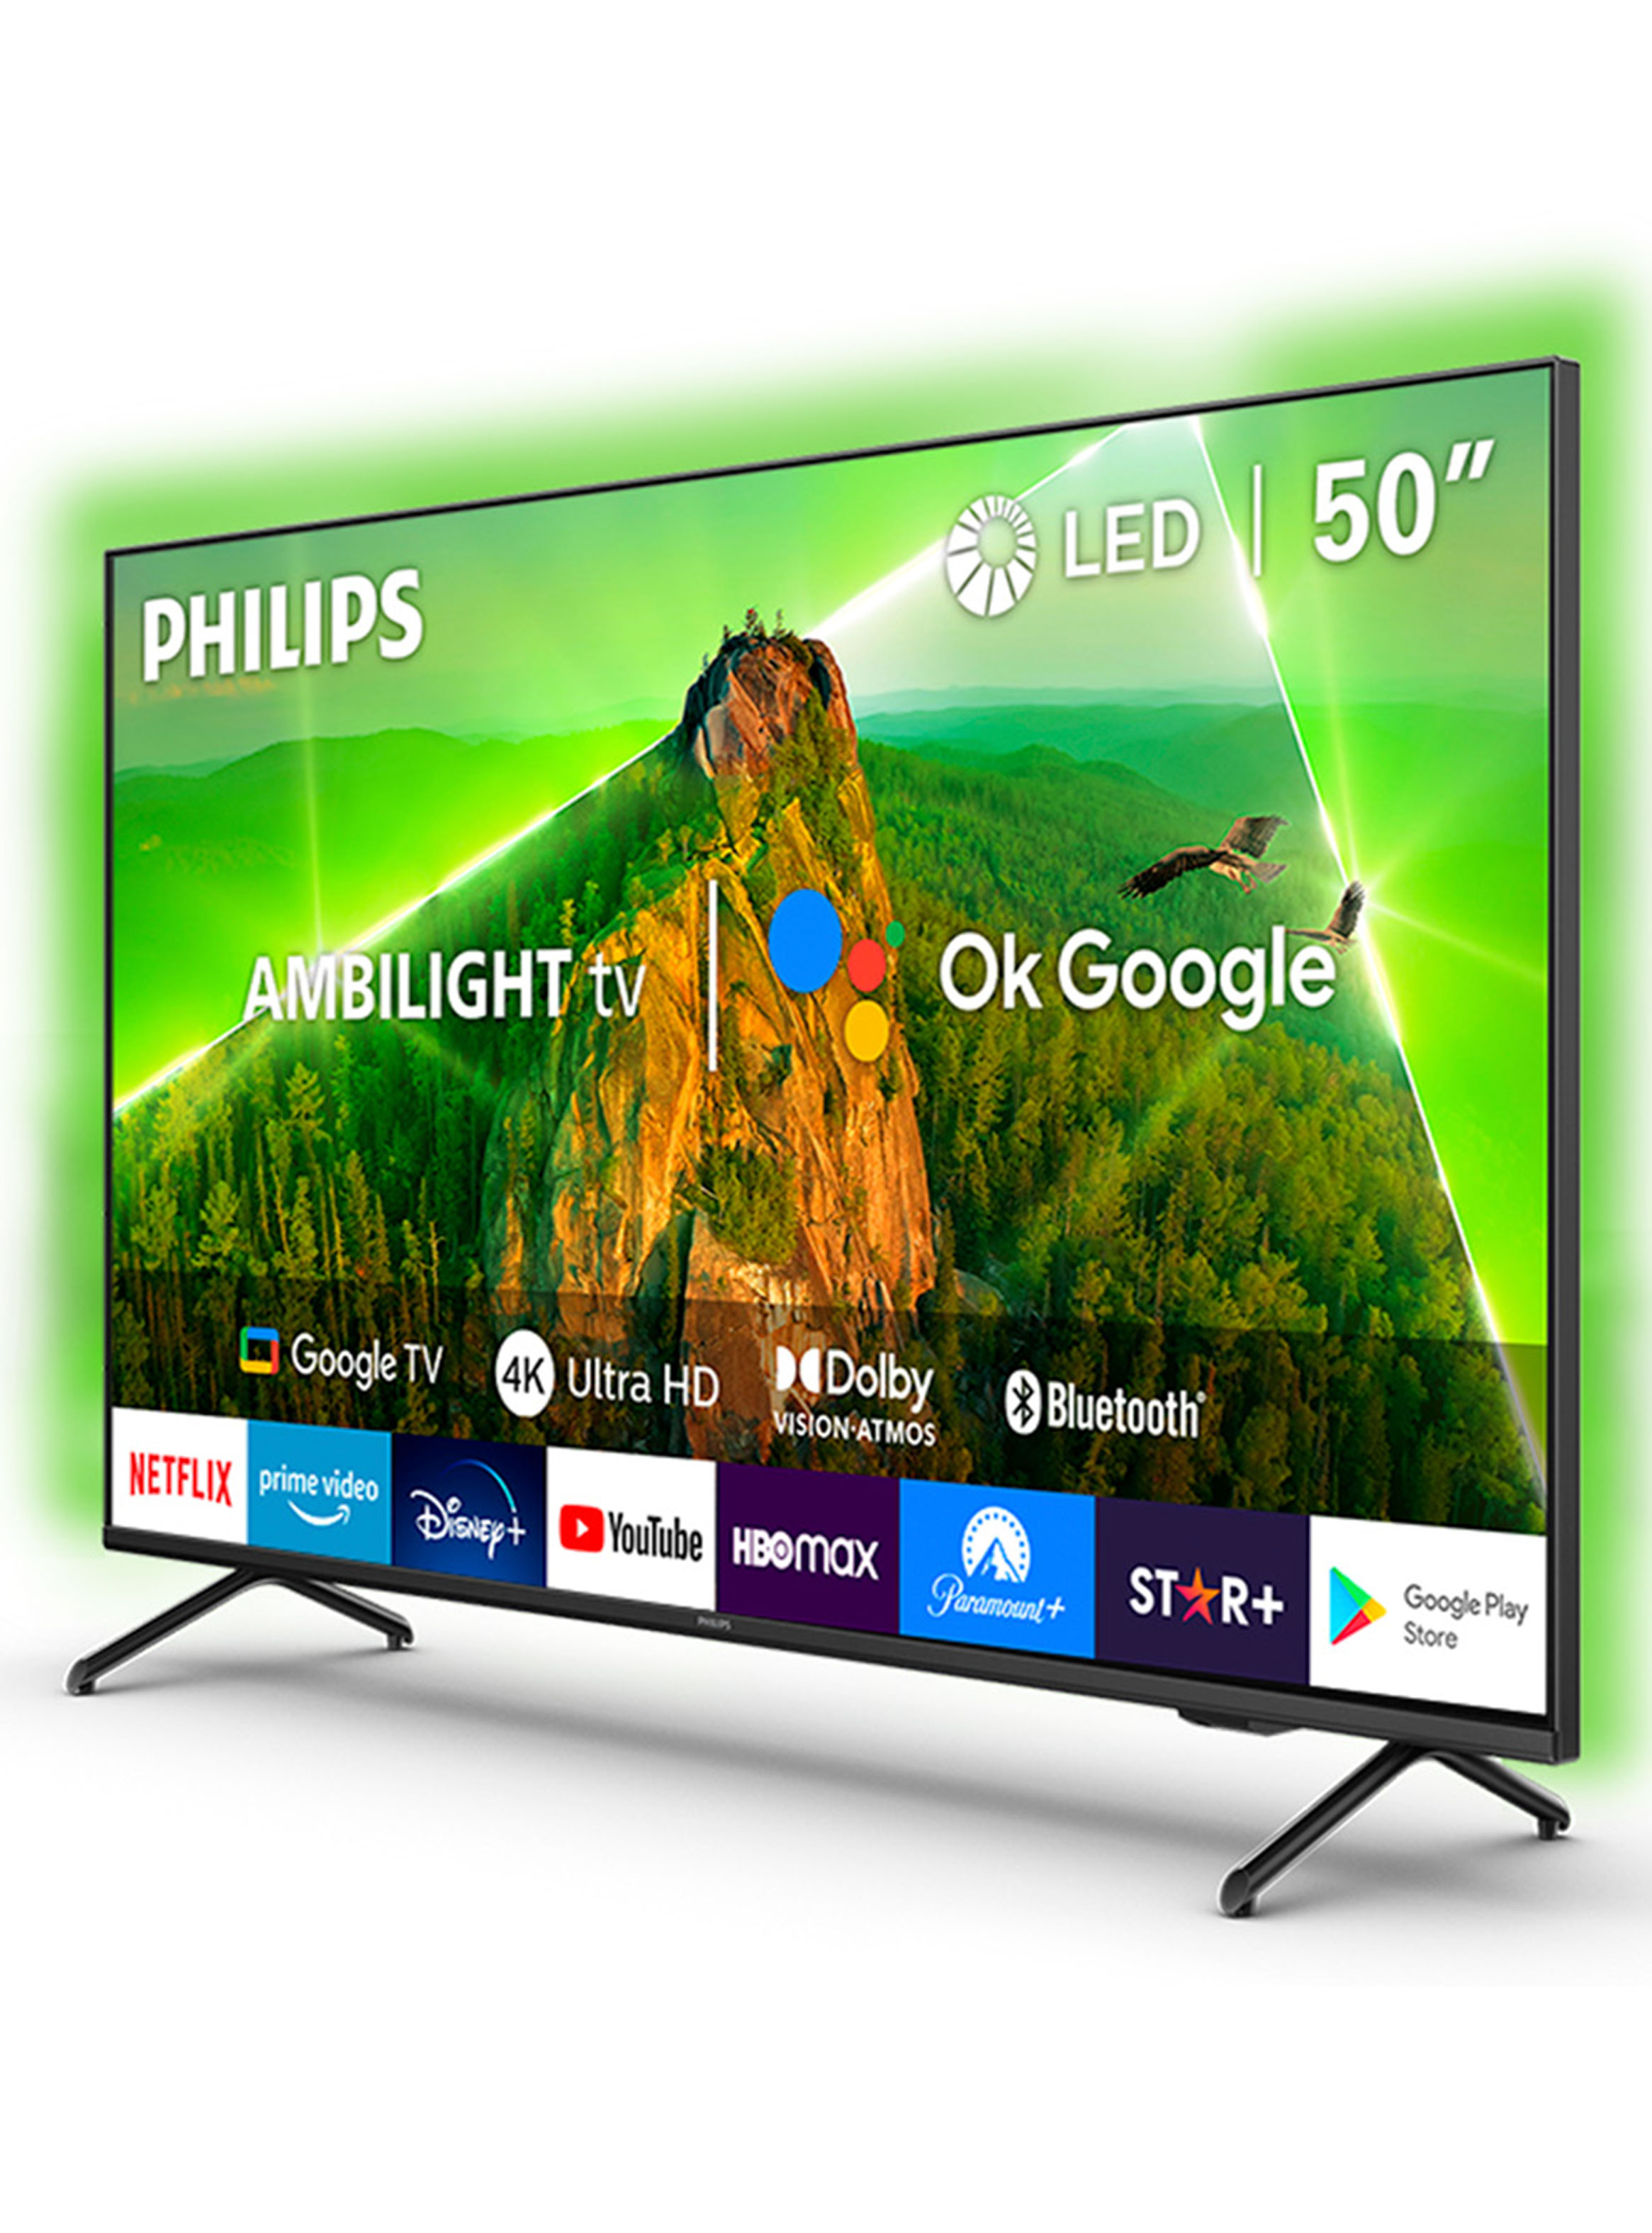 LED Smart TV 50 UHD 4K 50PUD7908 Ambilight TV - Smart TV